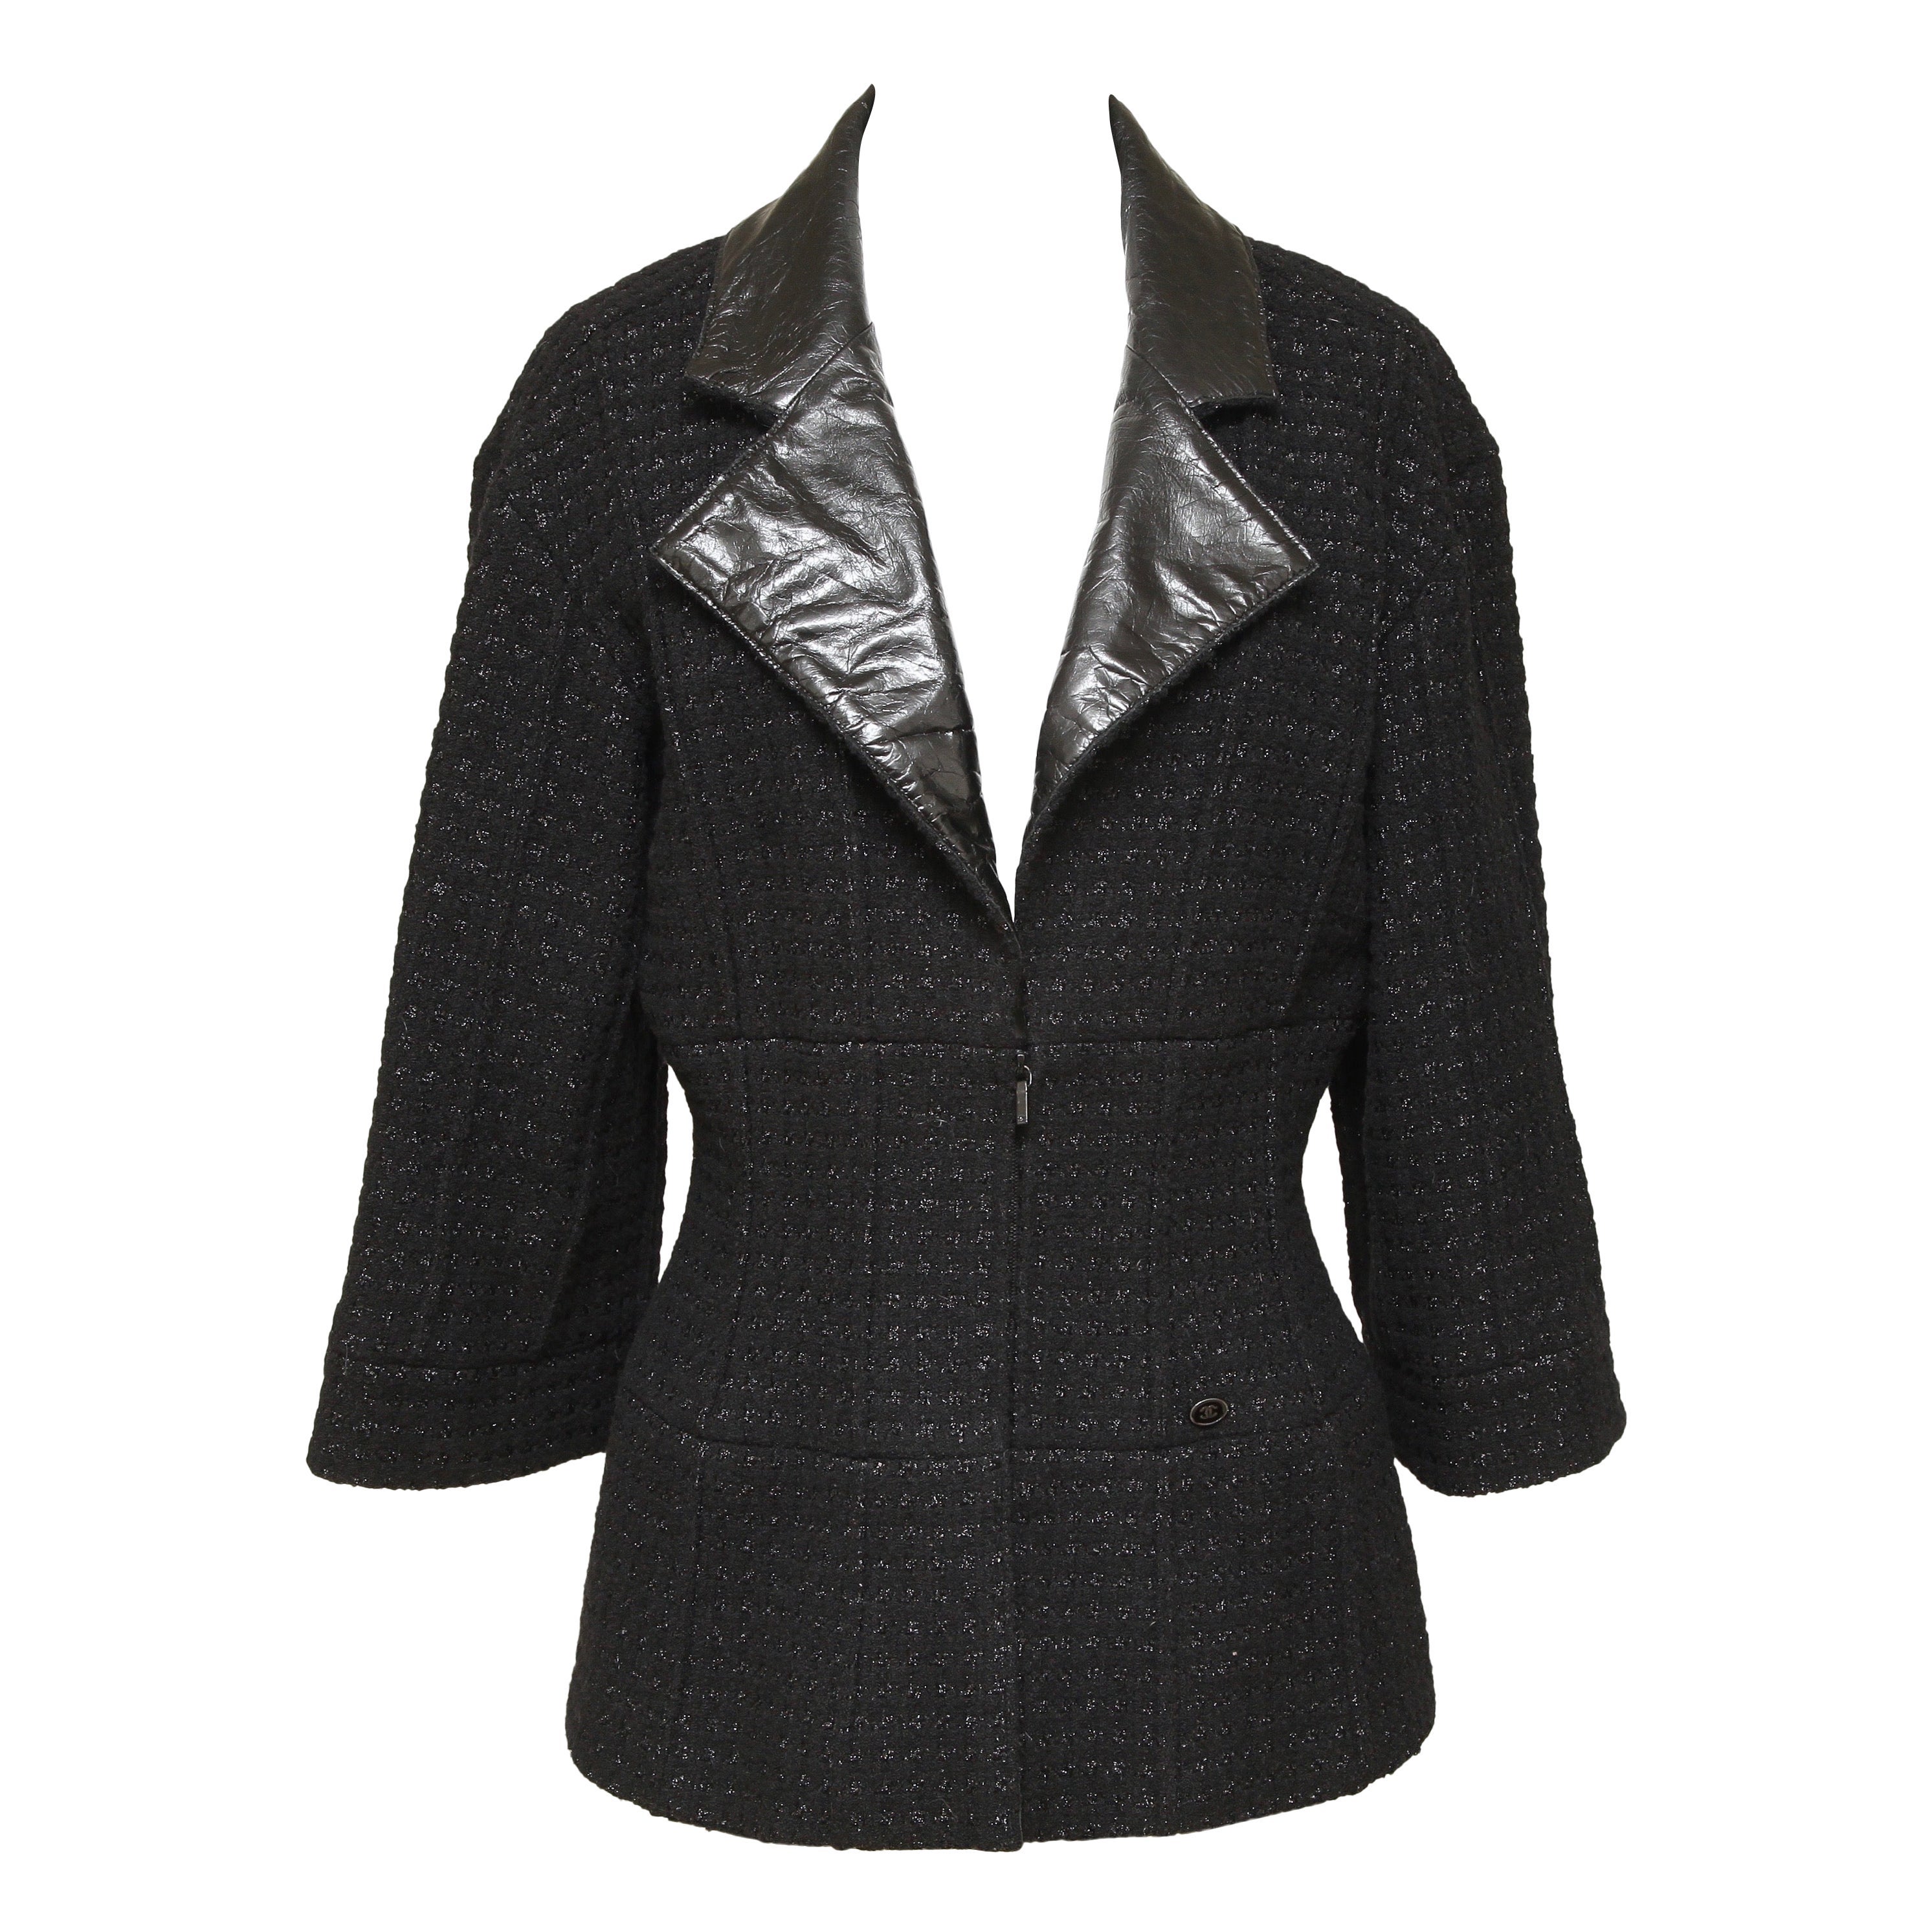 CHANEL Jacket Blazer Coat Tweed Black MetaIlic Leather Silver Chain Sz 42 2014 C For Sale